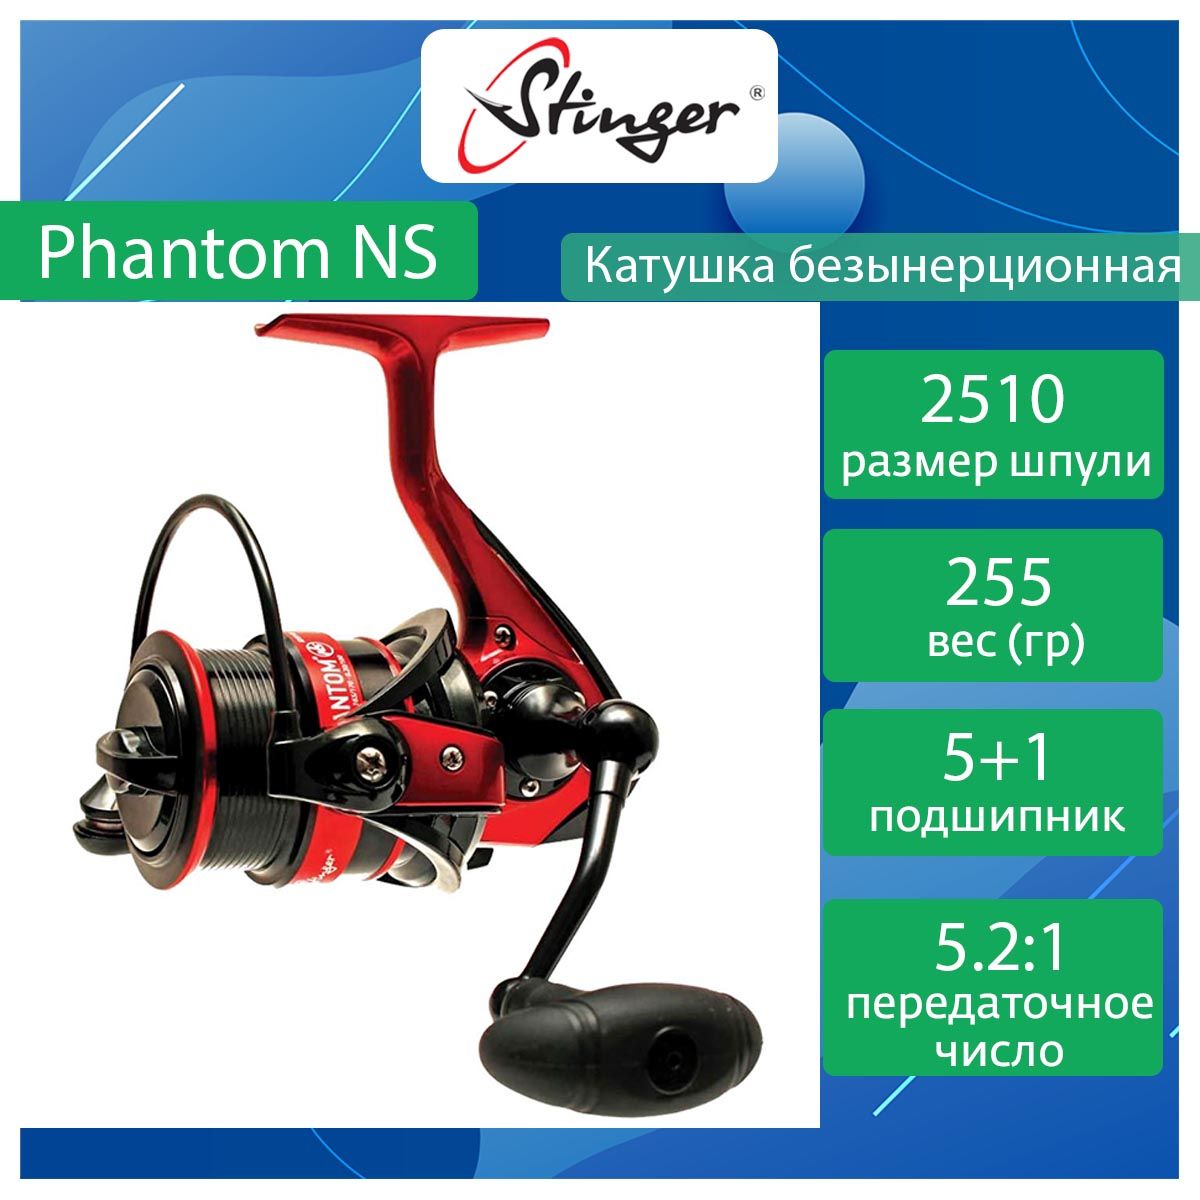 Катушка для рыбалки безынерционная Stinger Phantom NS ef53283